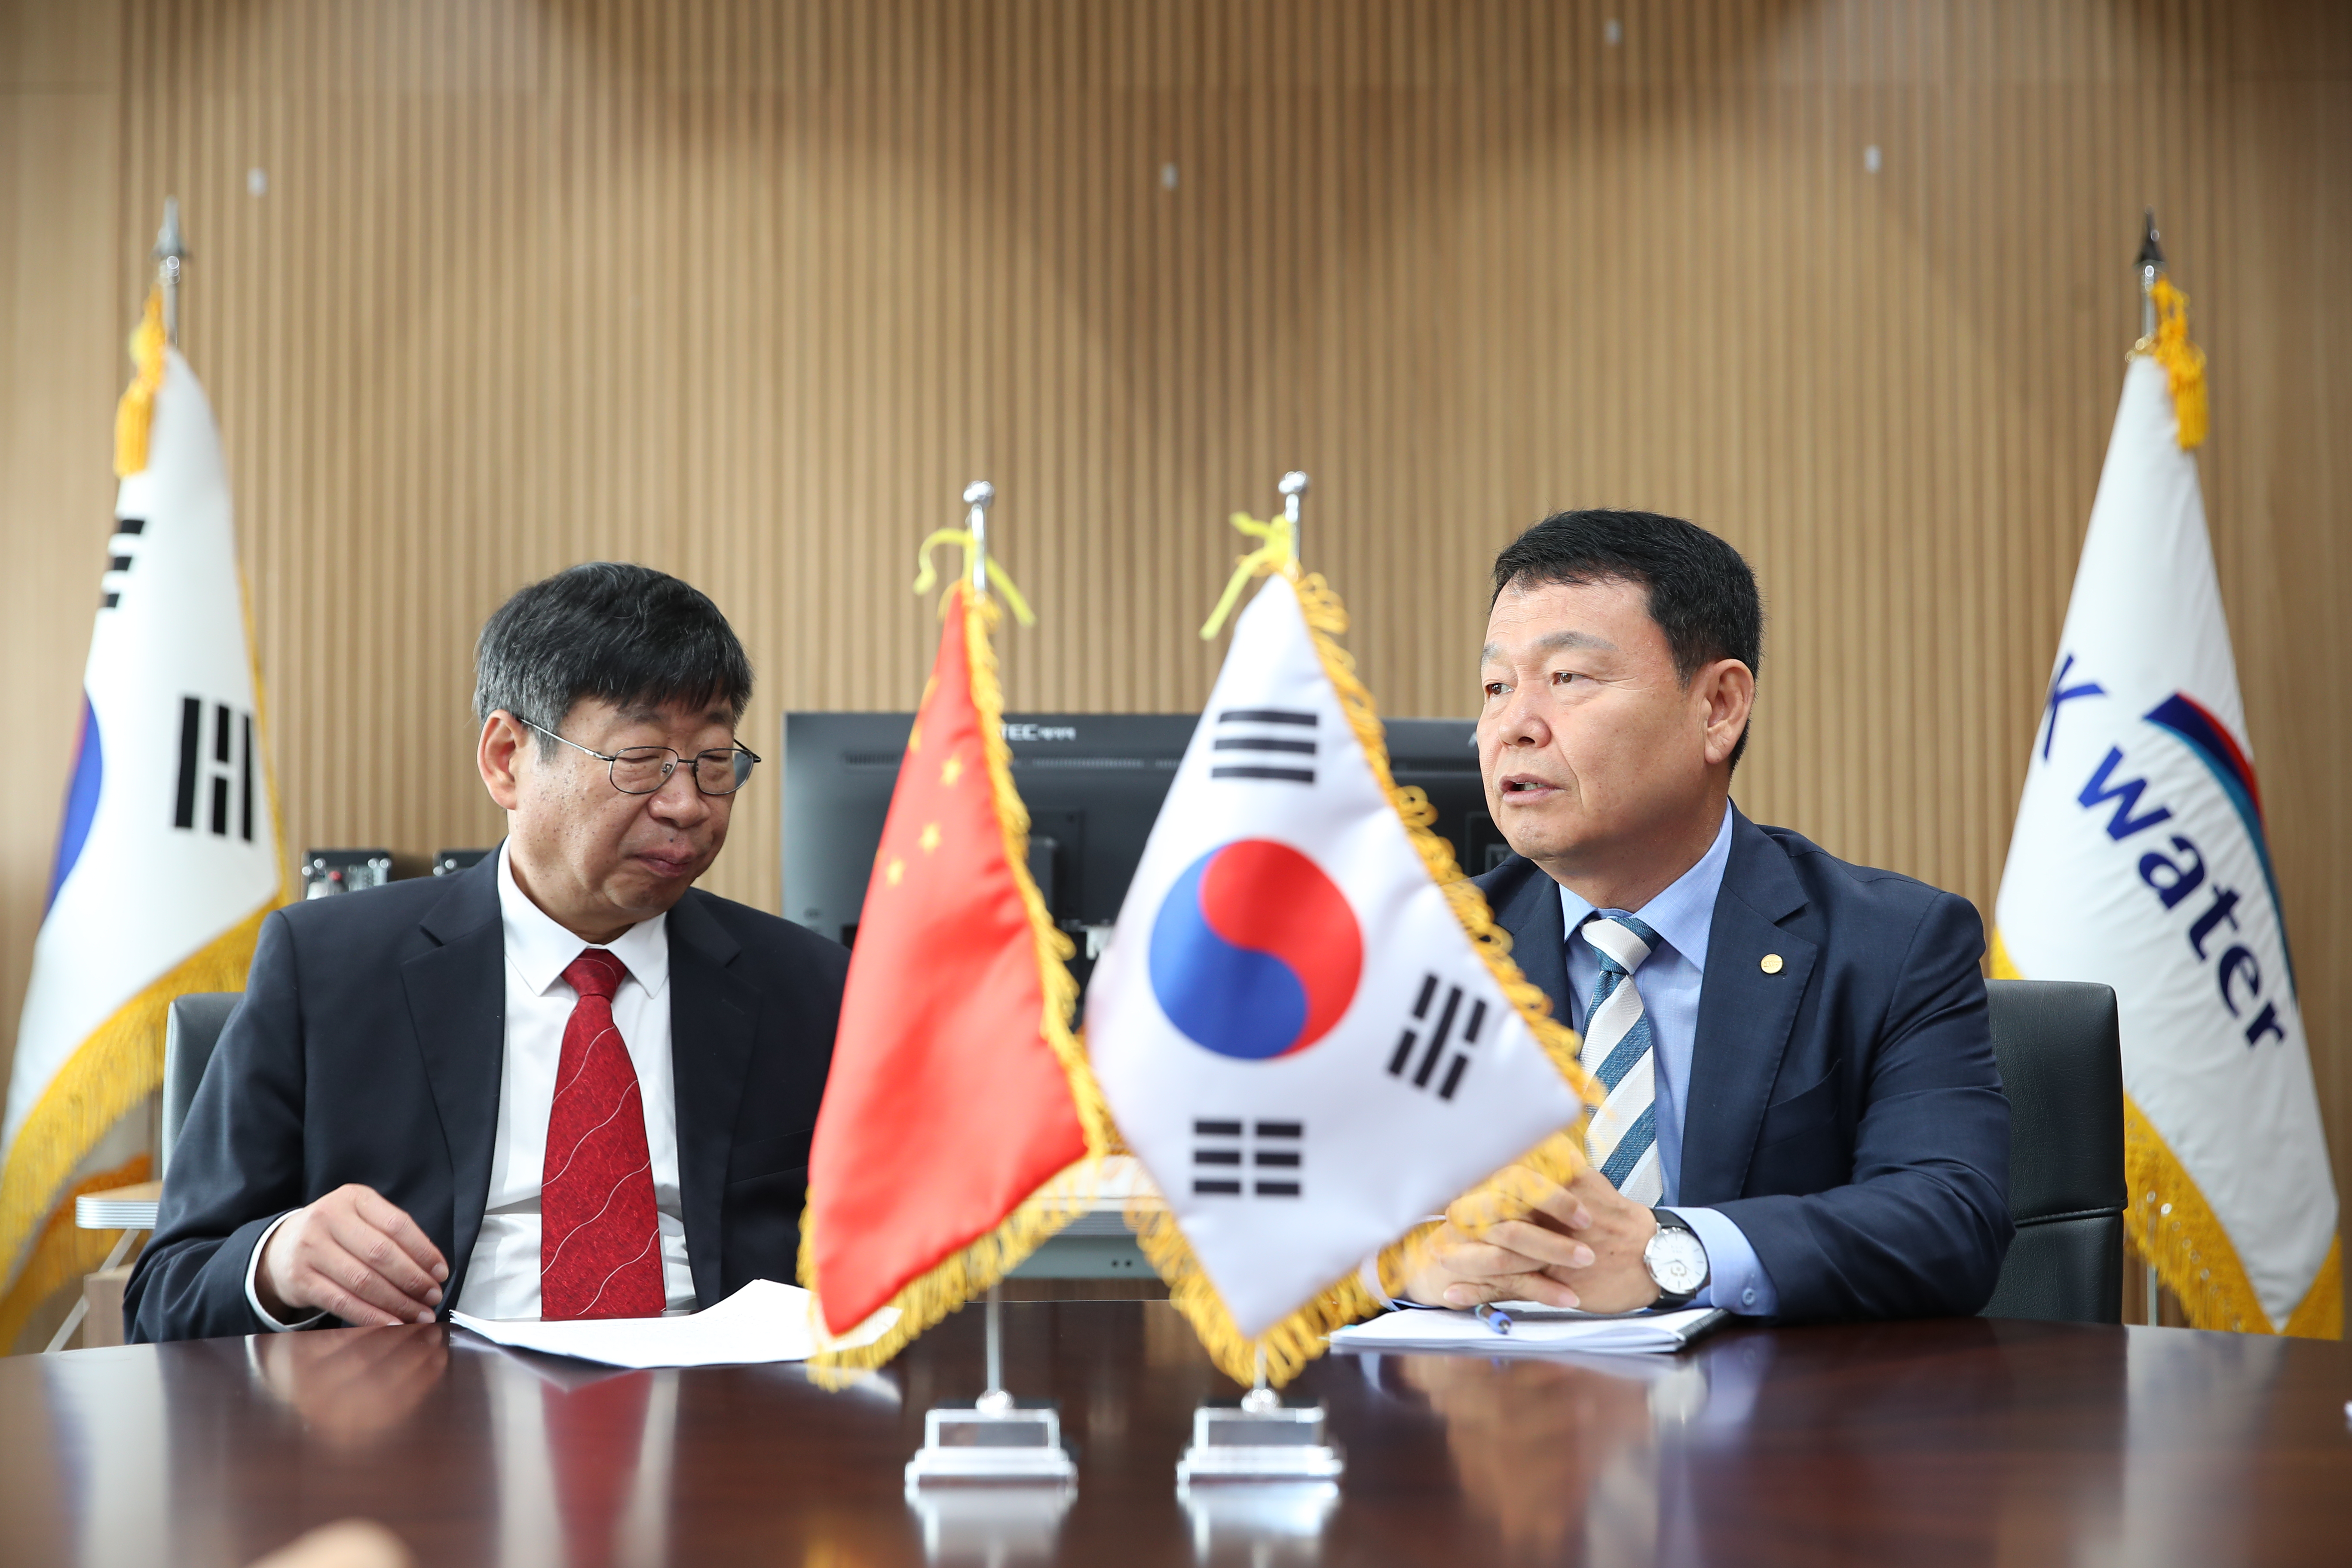 CEO Meets the Undersecretary of China